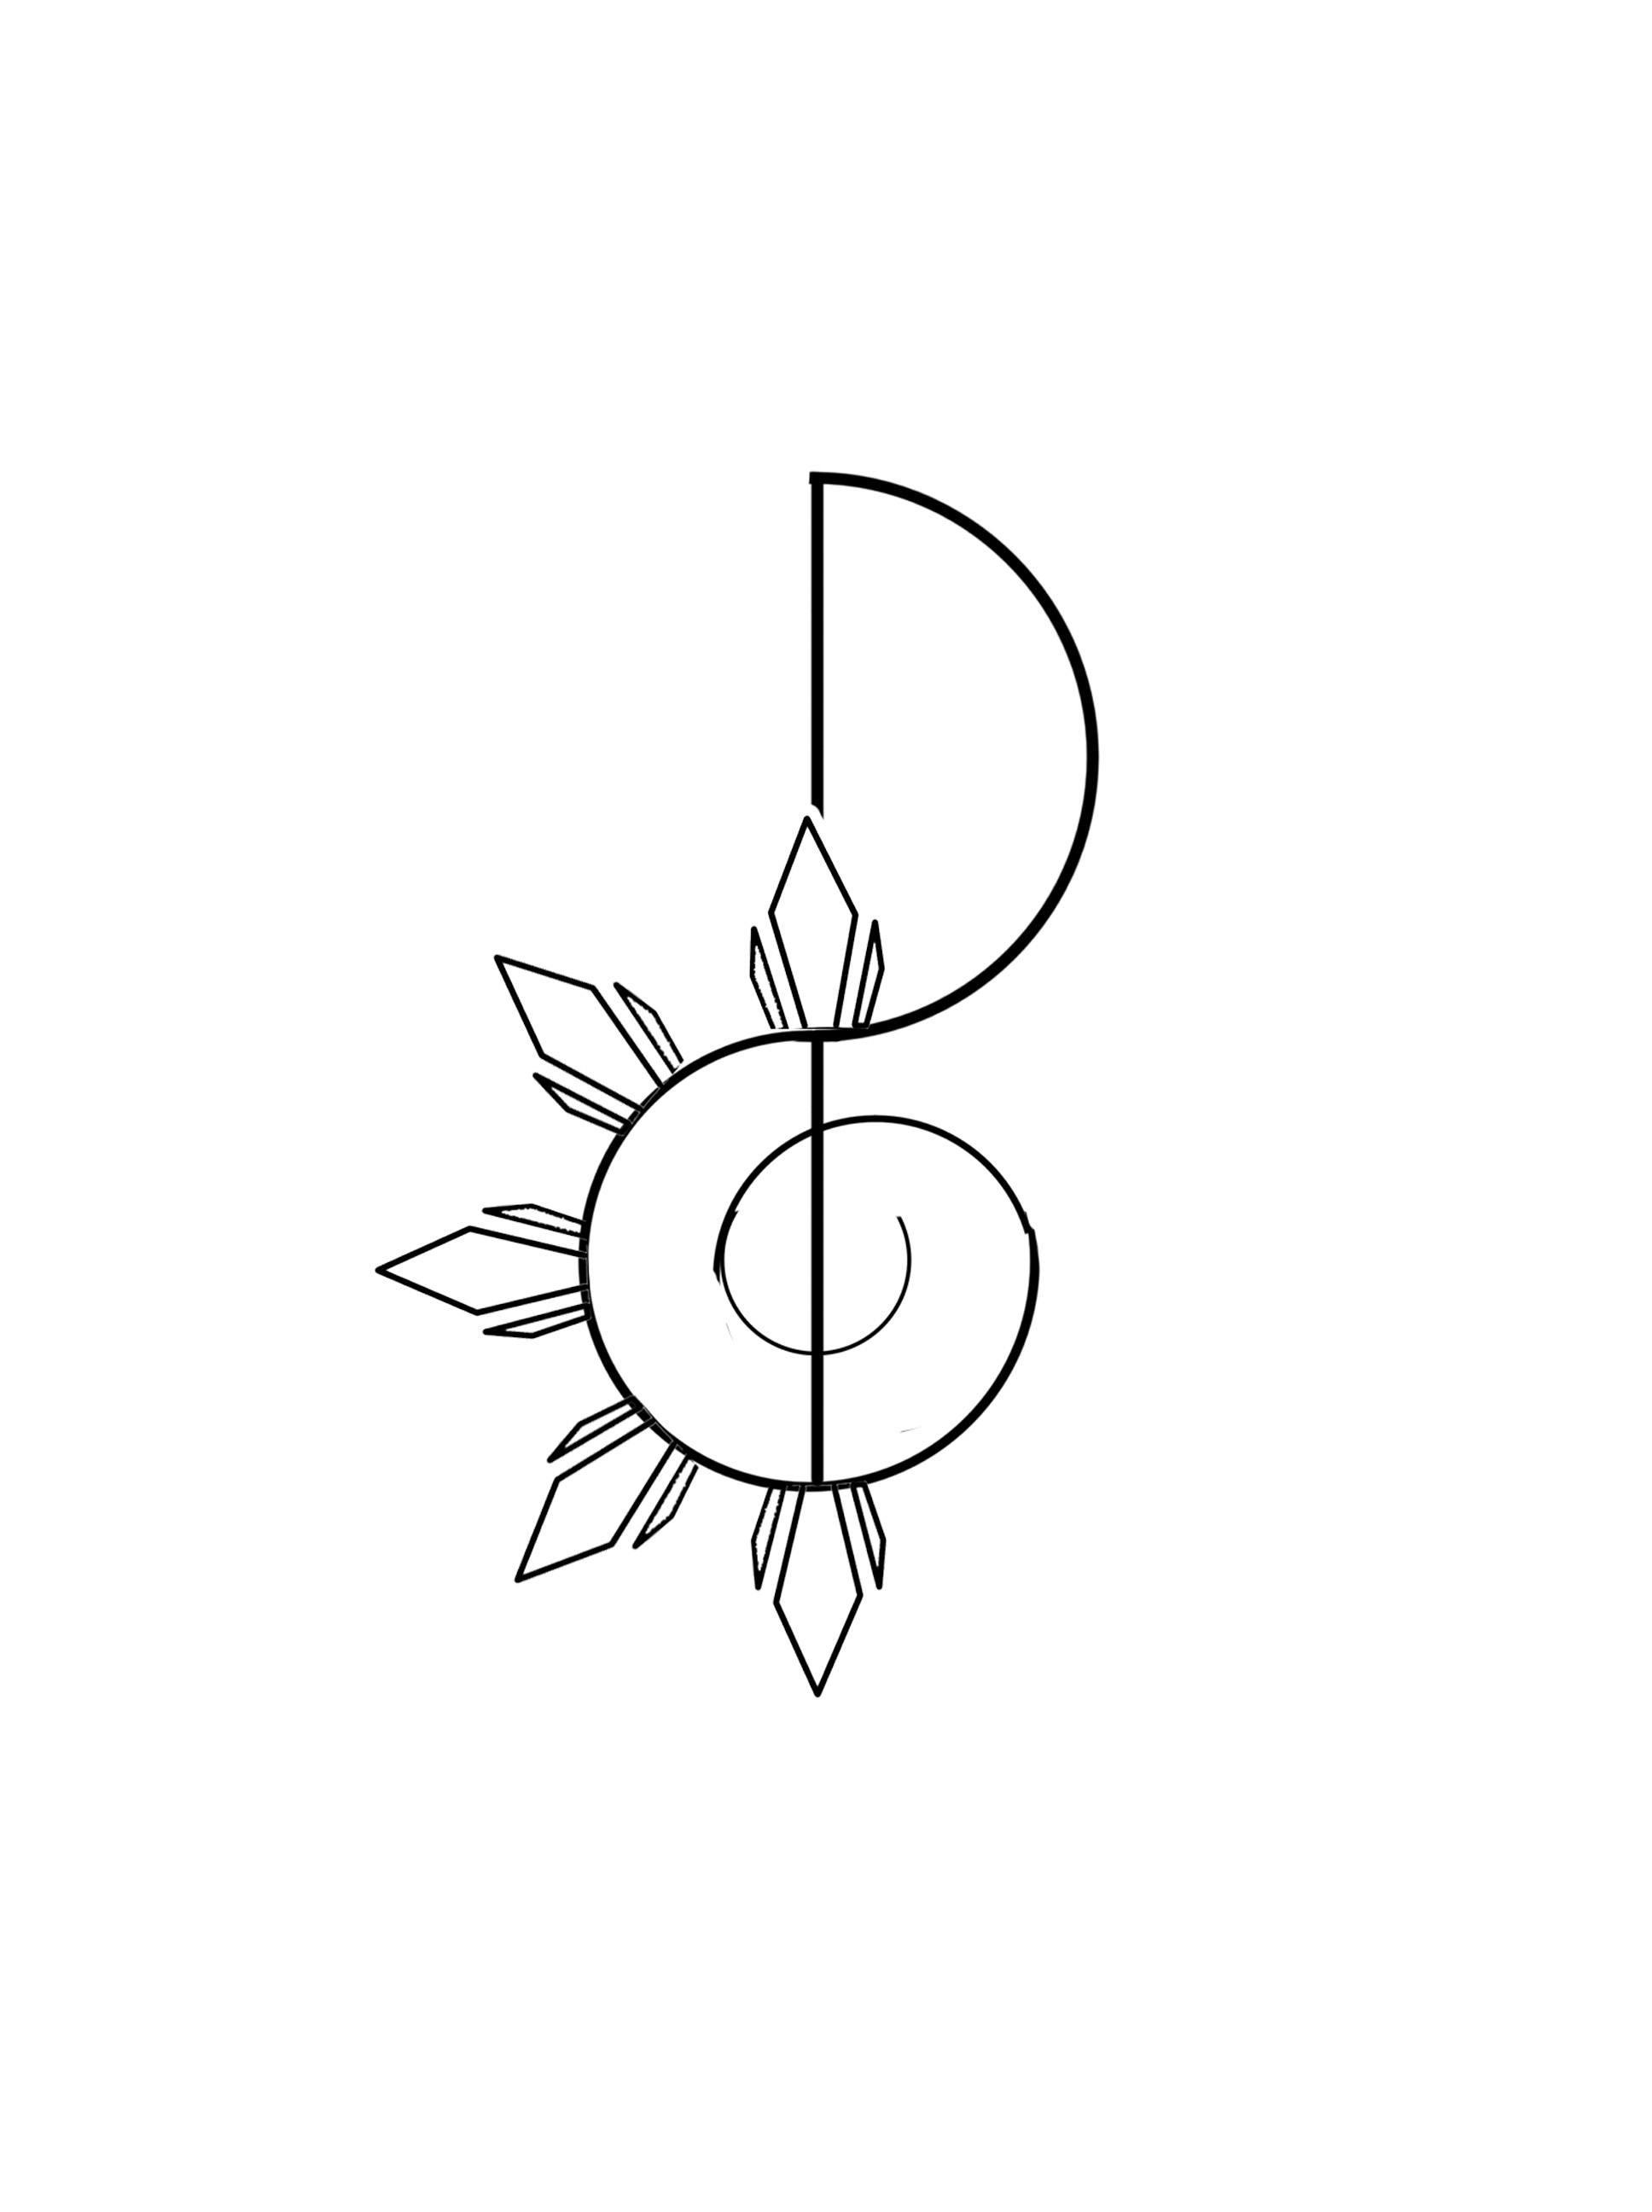 music logo clip art - photo #32